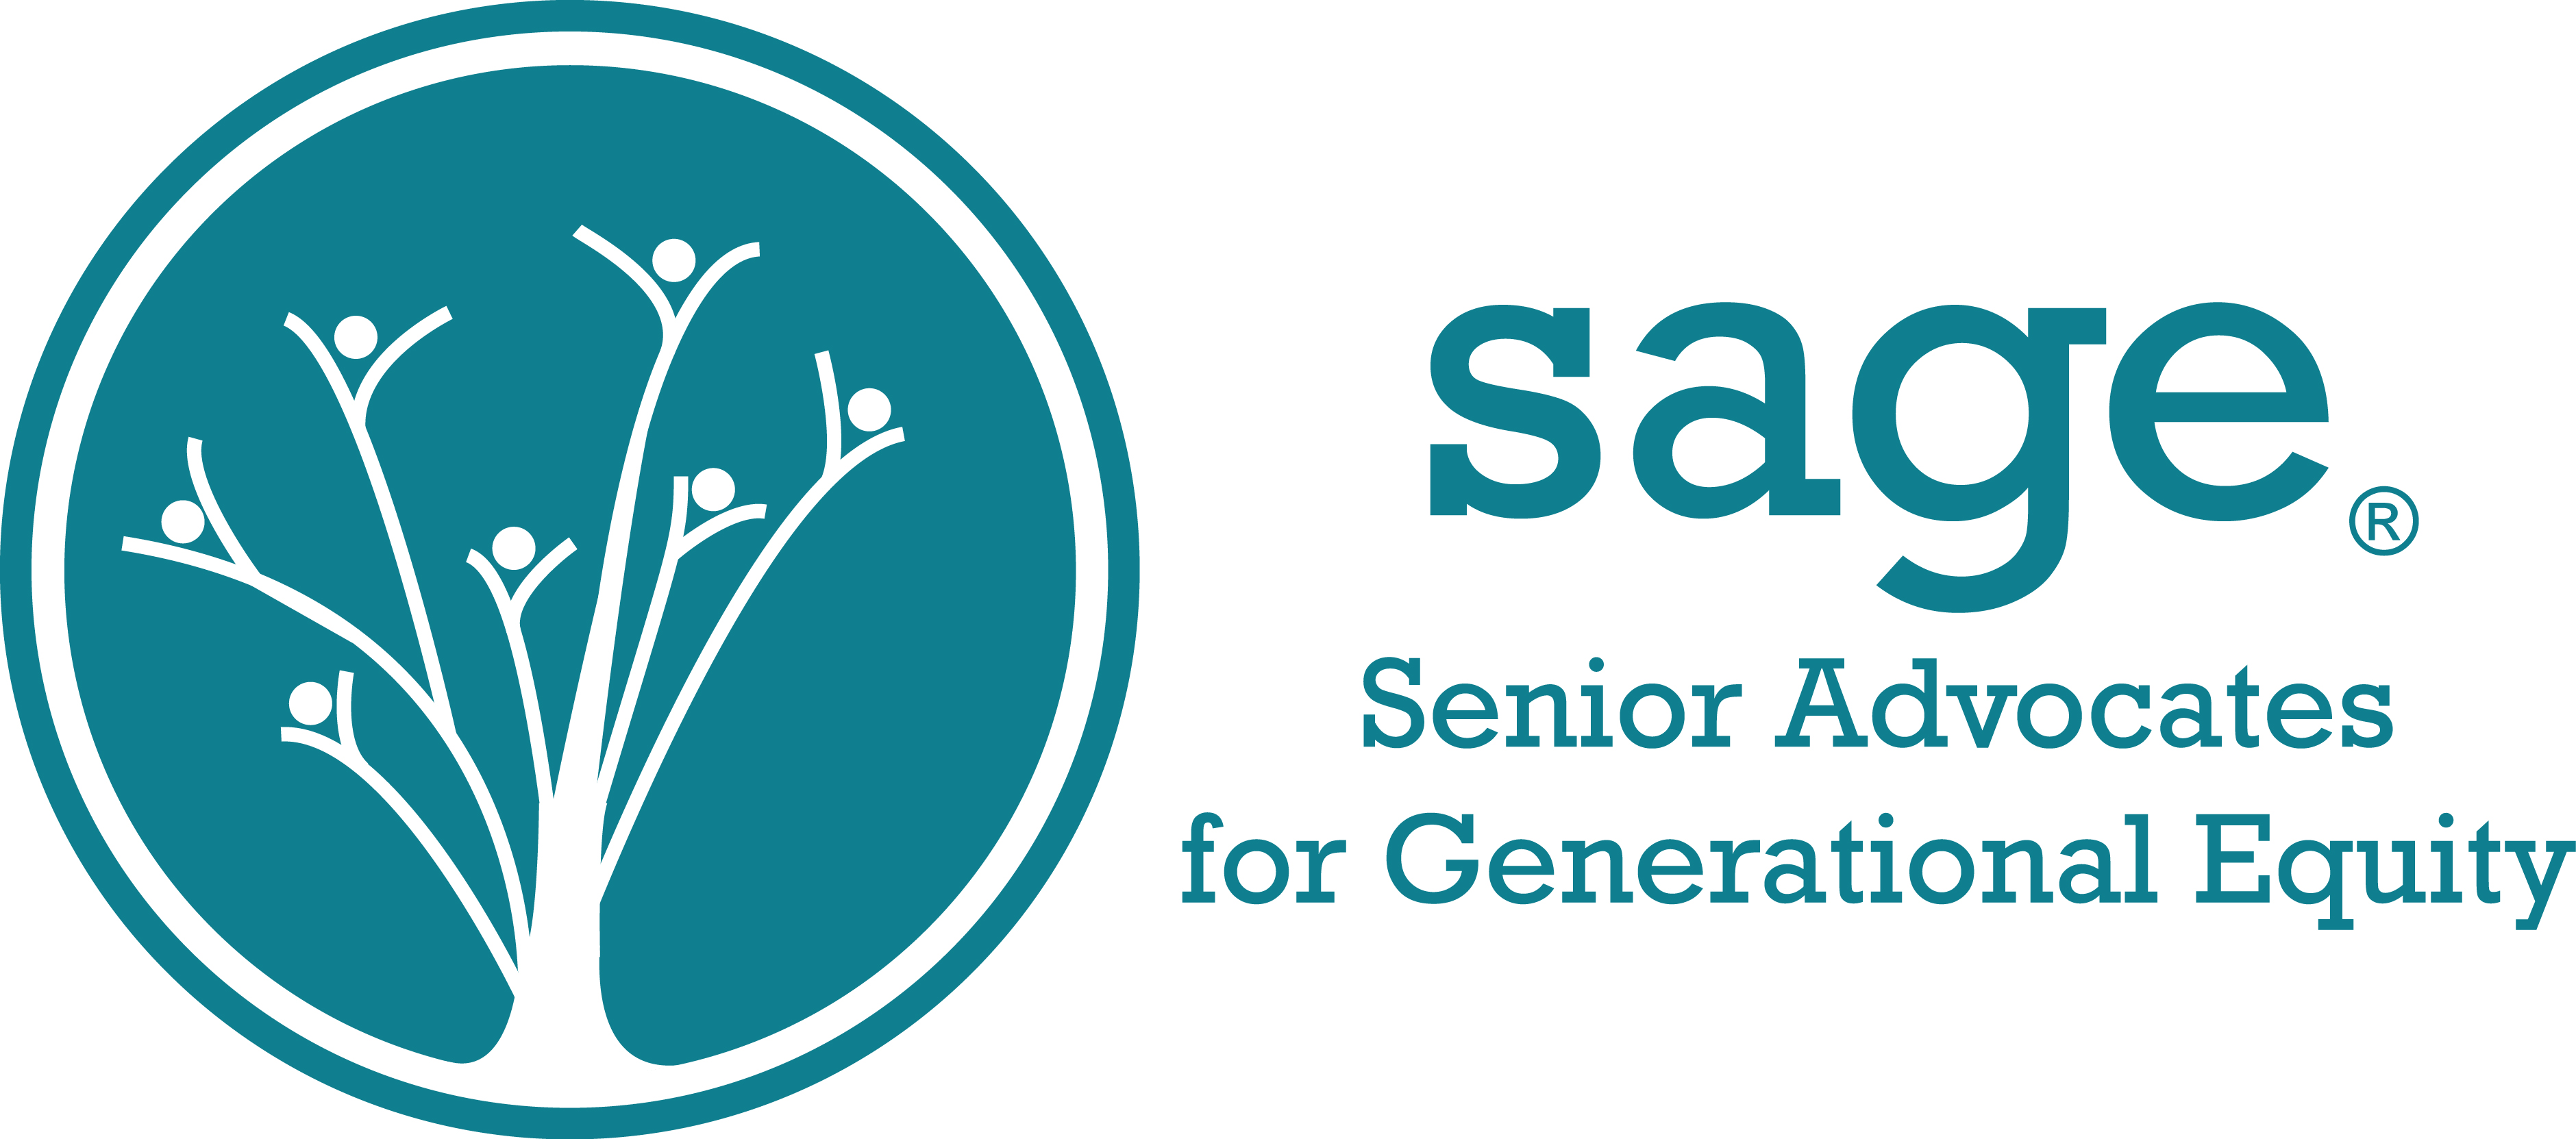 Sage-Logo-Teal_Advocates.jpg